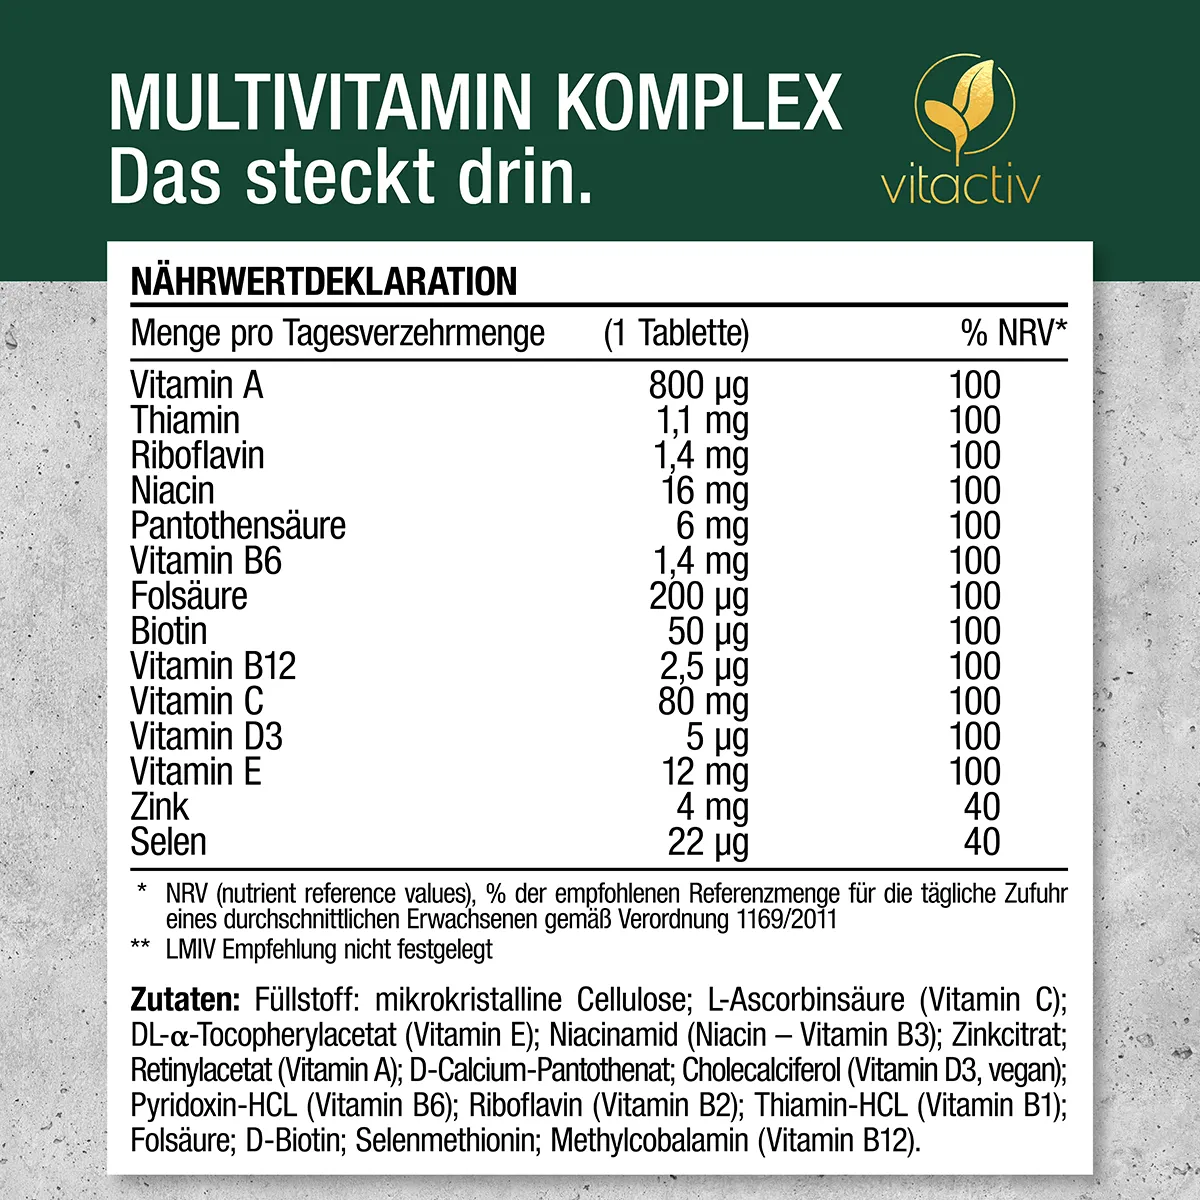 Nährwertdeklaration: Multivitamin Komplex enthält 800 Mikrogramm Vitamin A, 1,1 mg Thiamin, 1,4 mg Riboflavin, 16 mg Niacin, 6 mg Pantothensäure, 1,4 mg Vitamin B6, 200 Mikrogramm Folsäure, 50 Mikrogramm Biotin, 2,5 Mikrogramm Vitamin B12, 80 mg Vitamin C